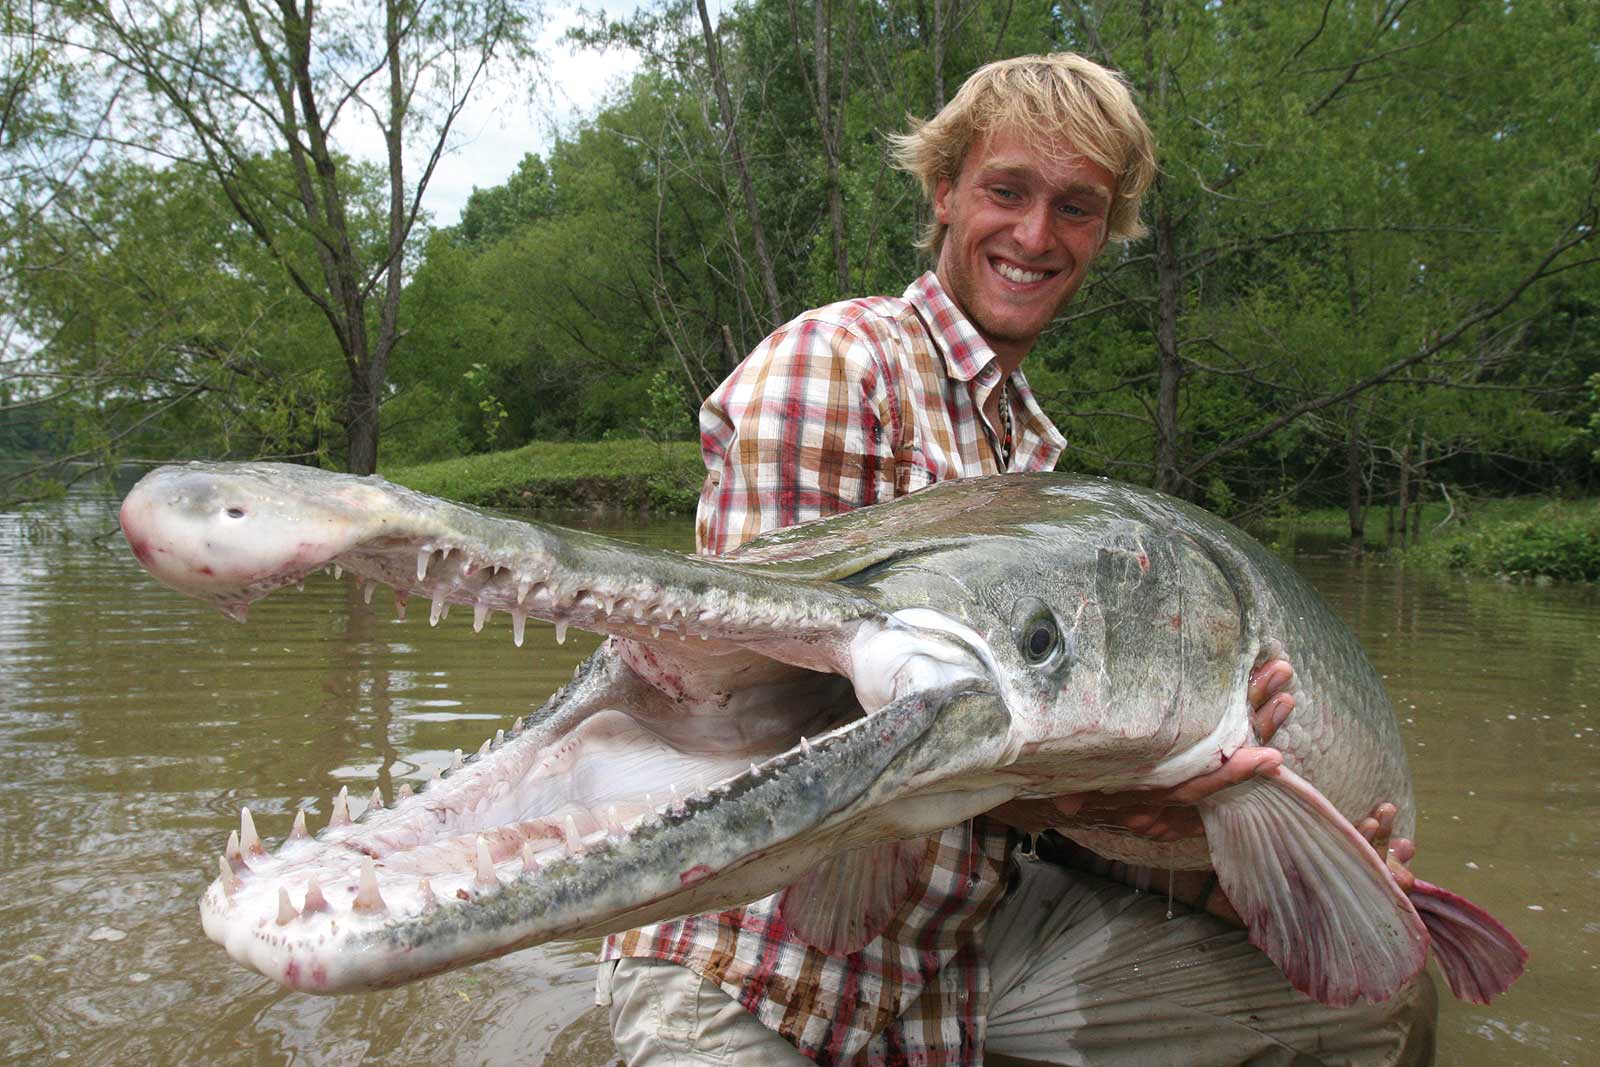 Jakub Vagner - verdensrekordholder, tv-vært og professionel lystfisker med fiskeeventyr over alt på kloden.